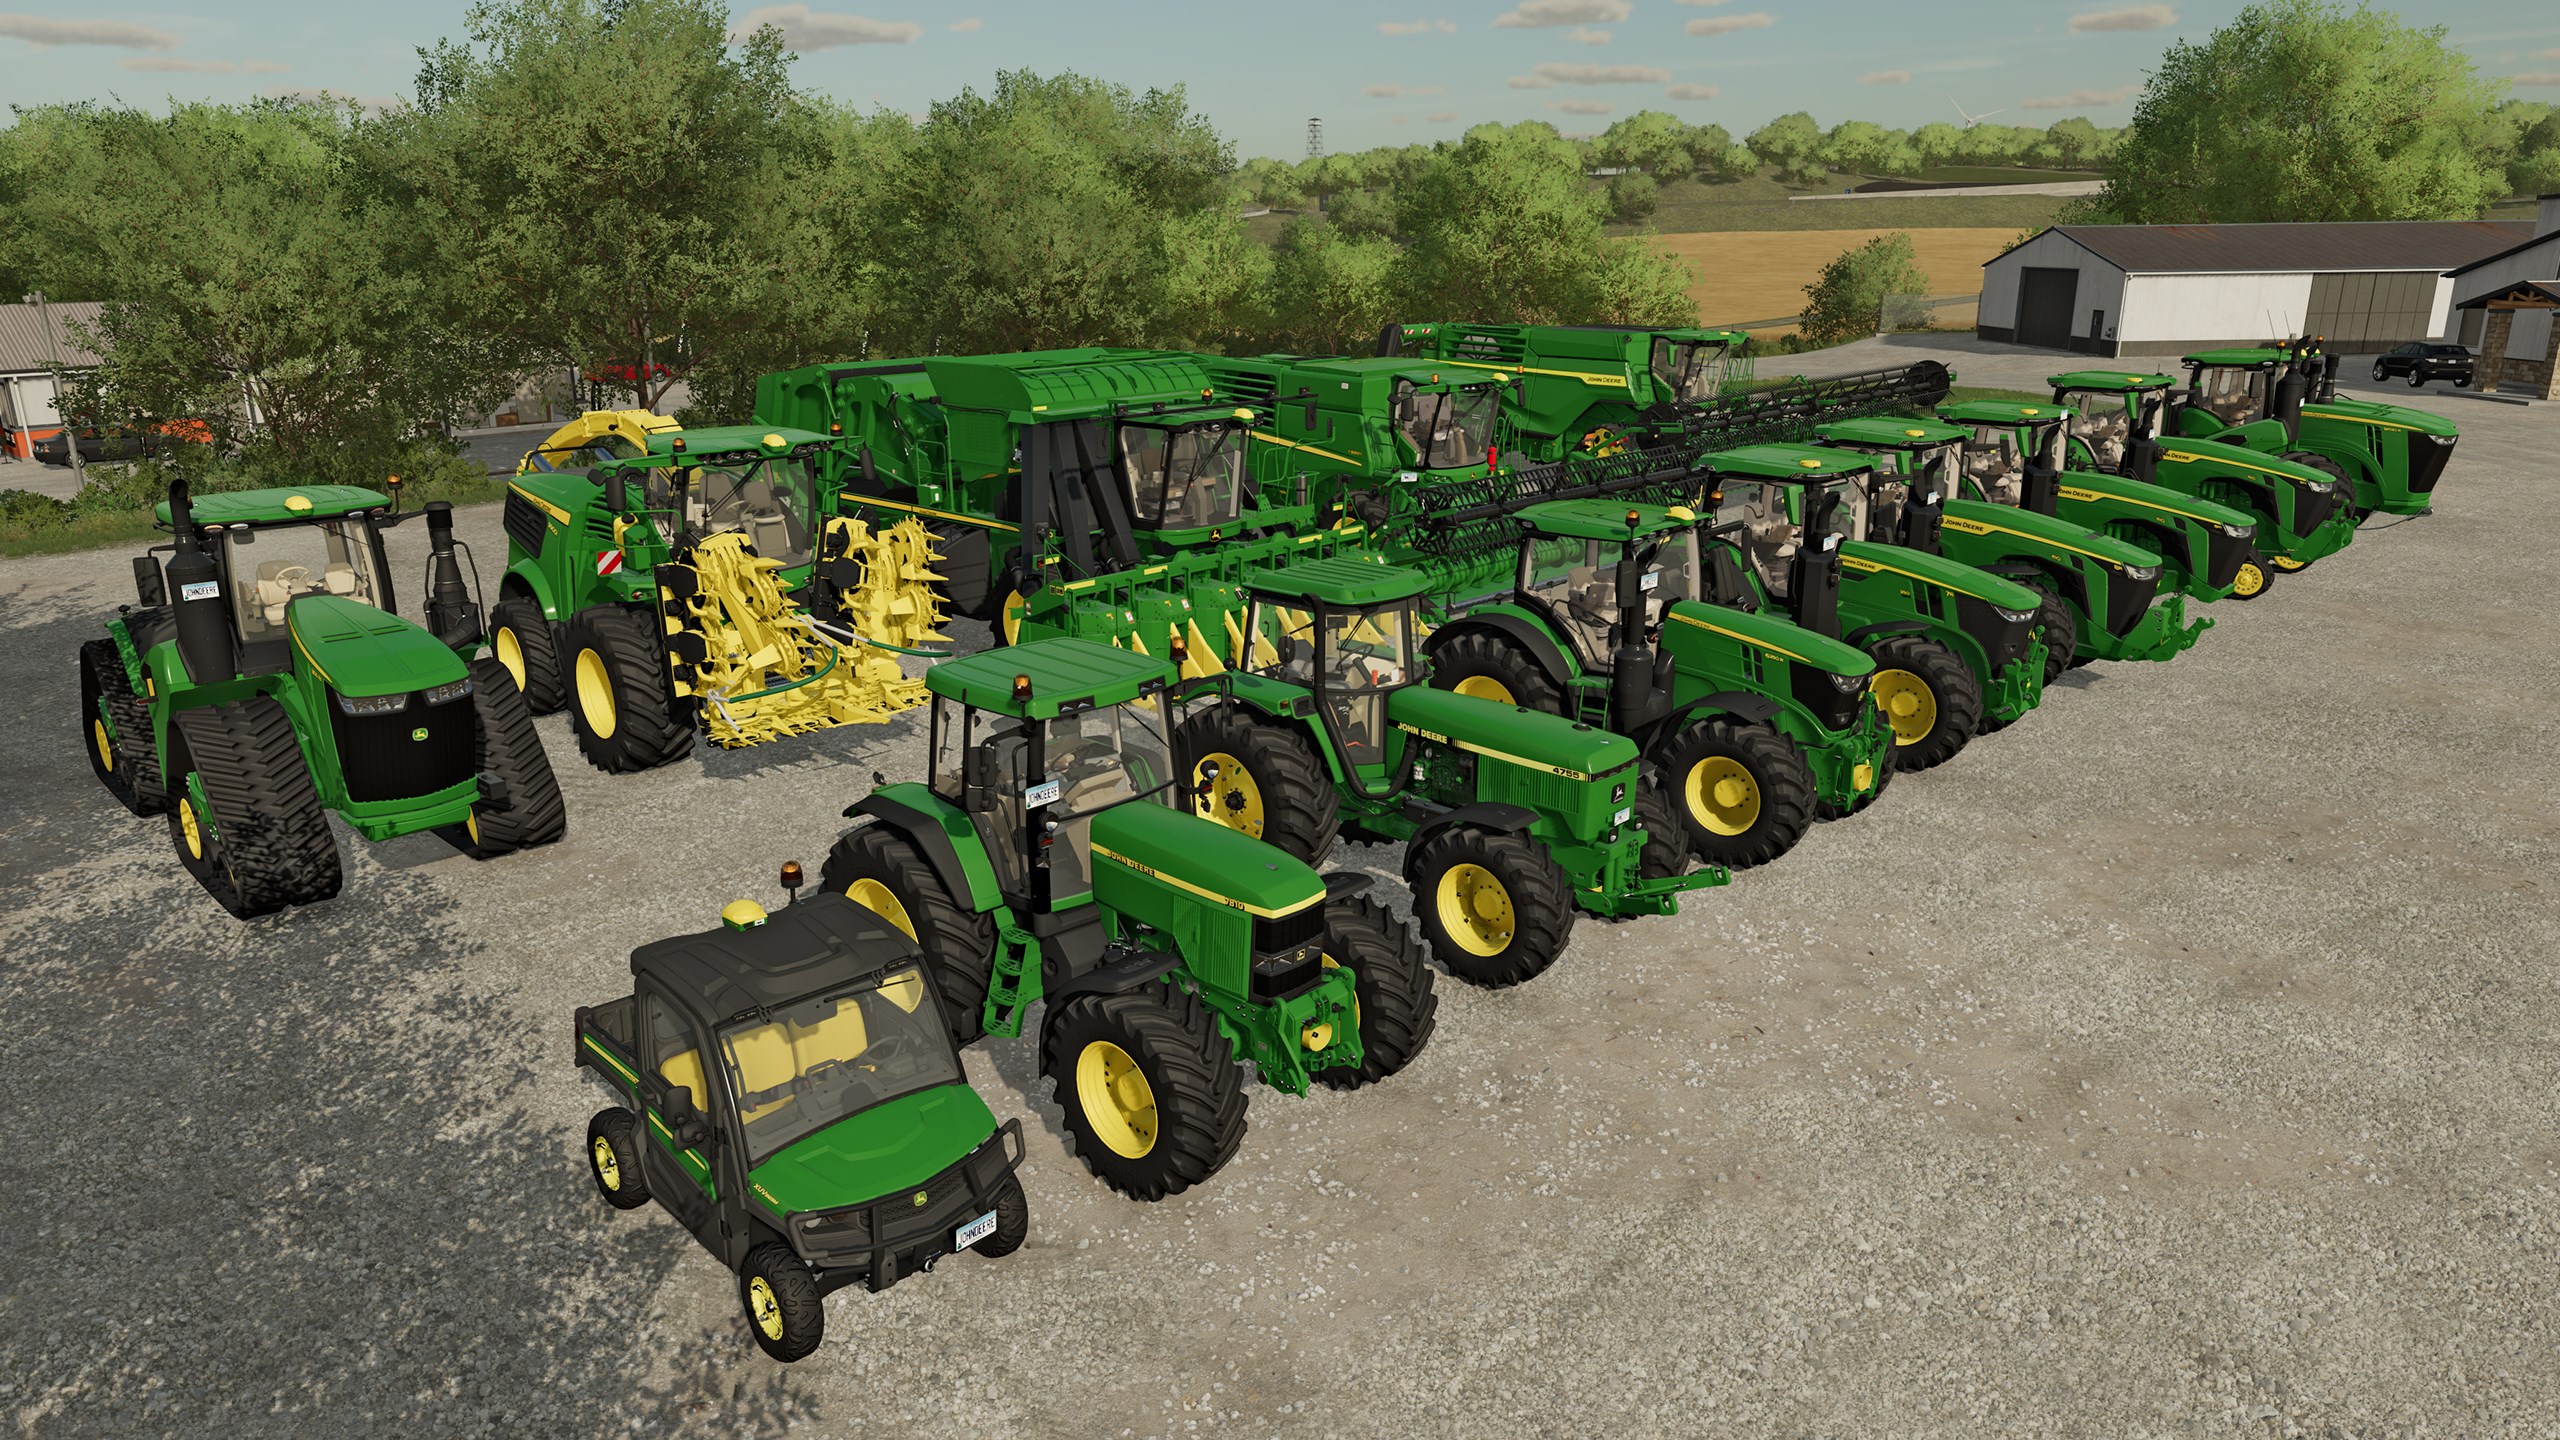 Farming Simulator 22 - New Build Mode - FS 22